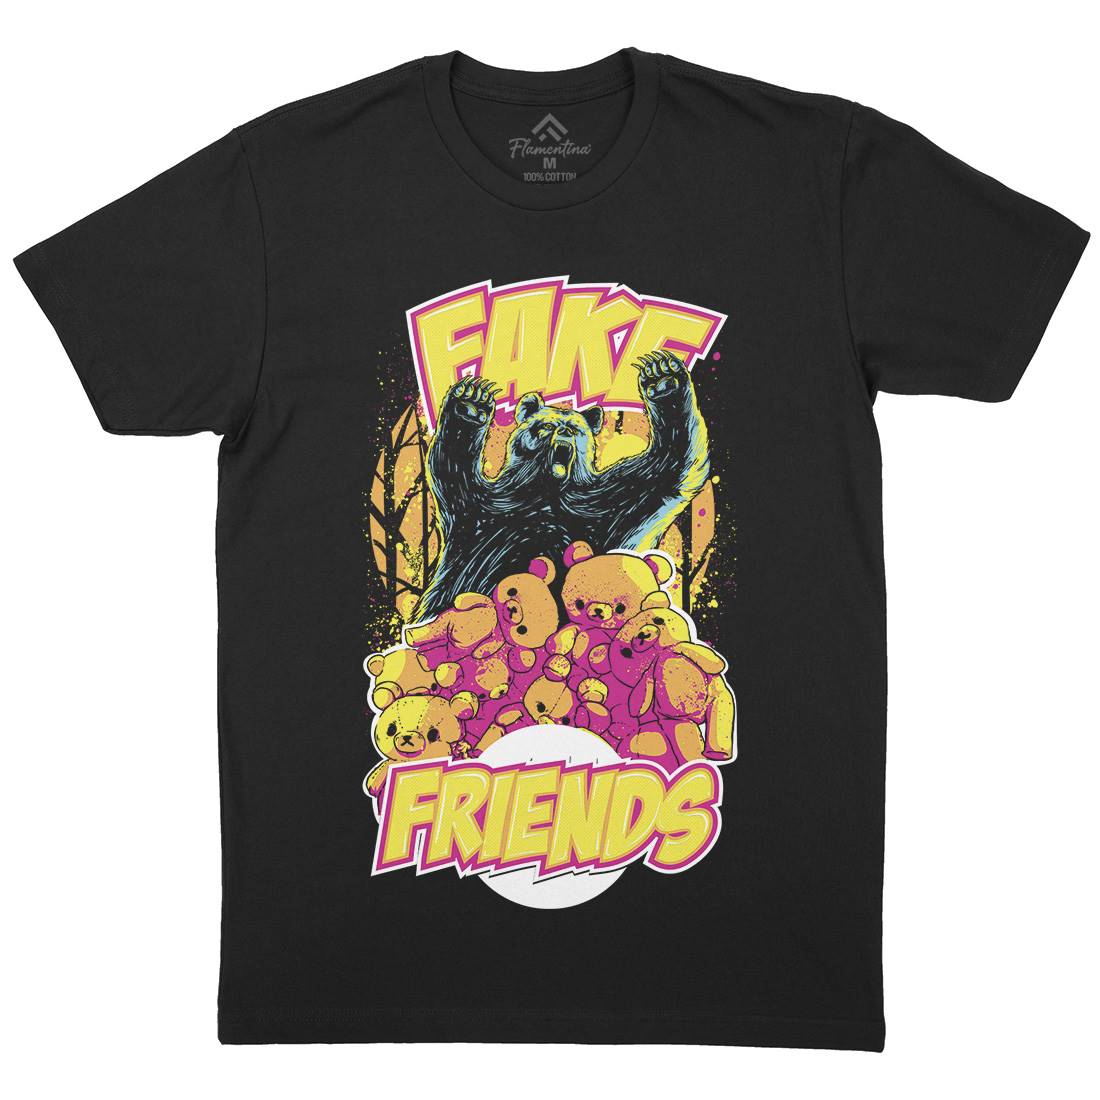 Fake Friends Mens Crew Neck T-Shirt Retro C929